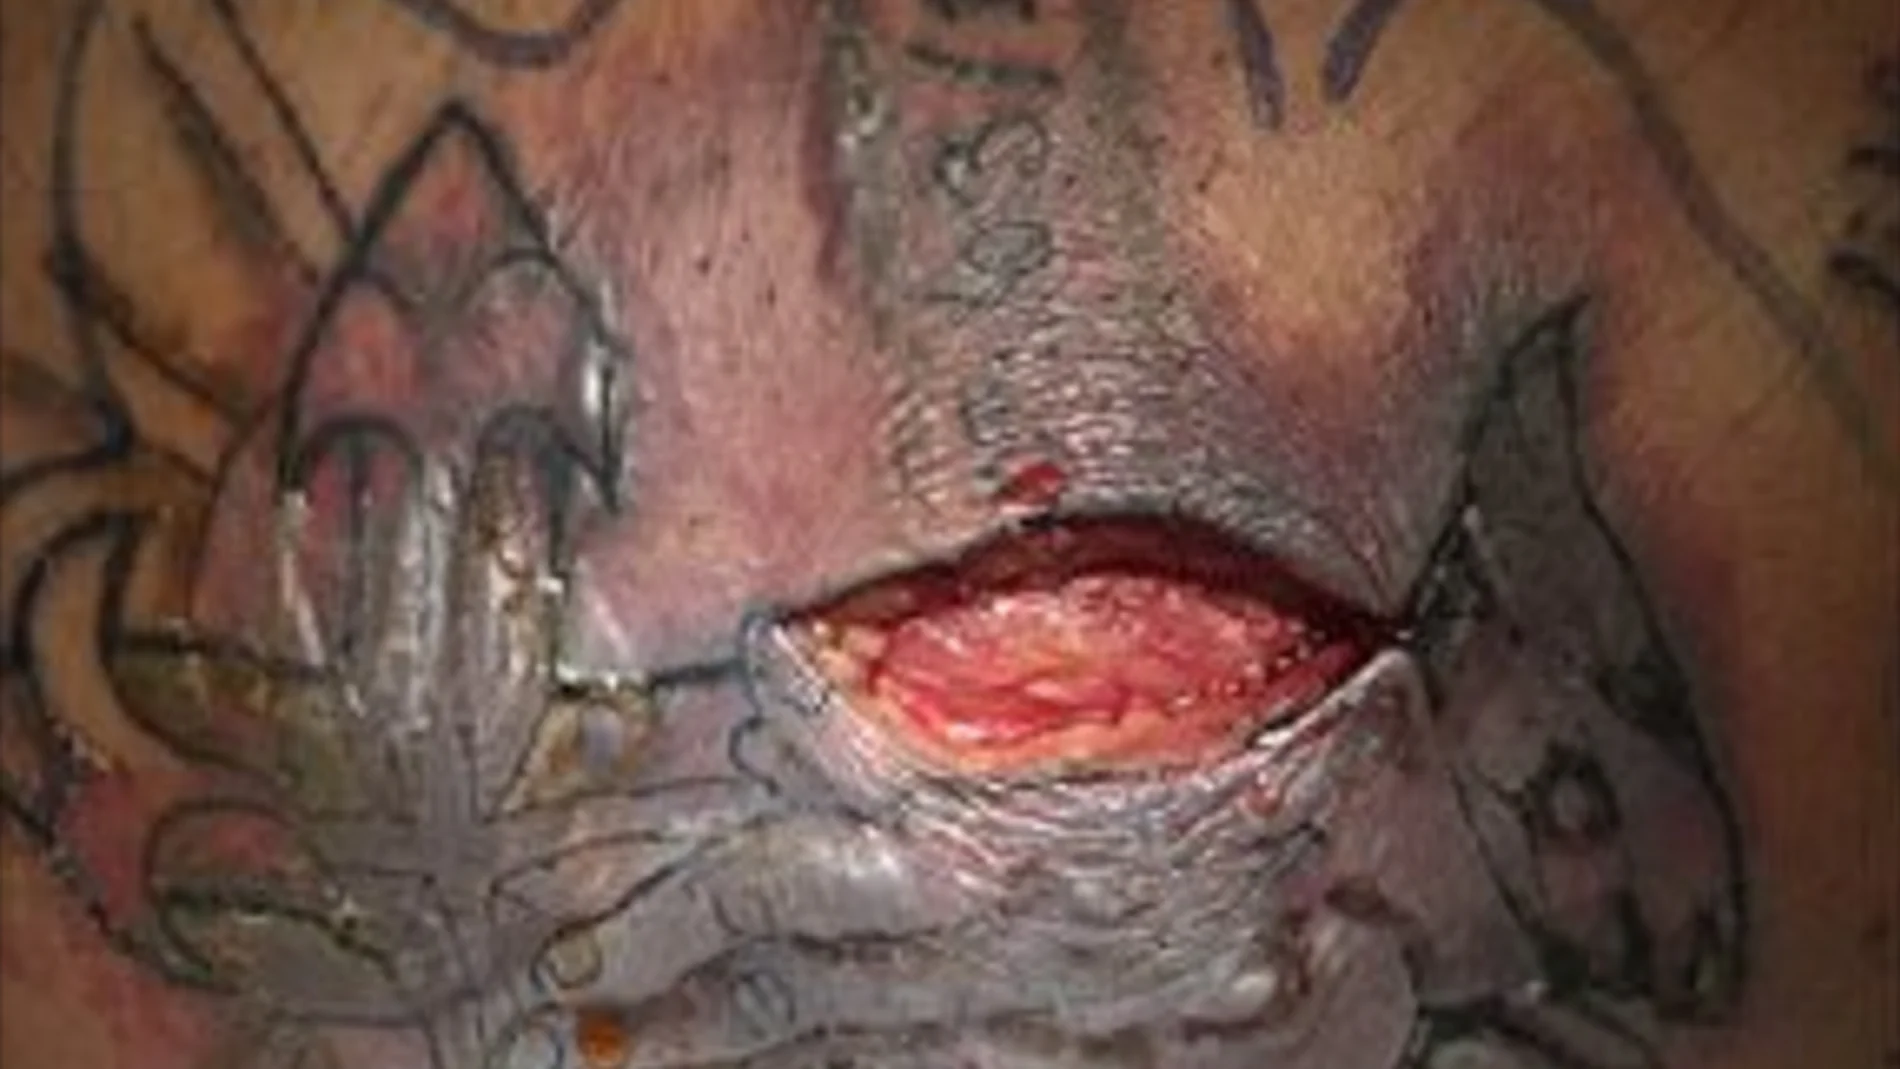 La herida provocada por la bacteria en el tatuaje